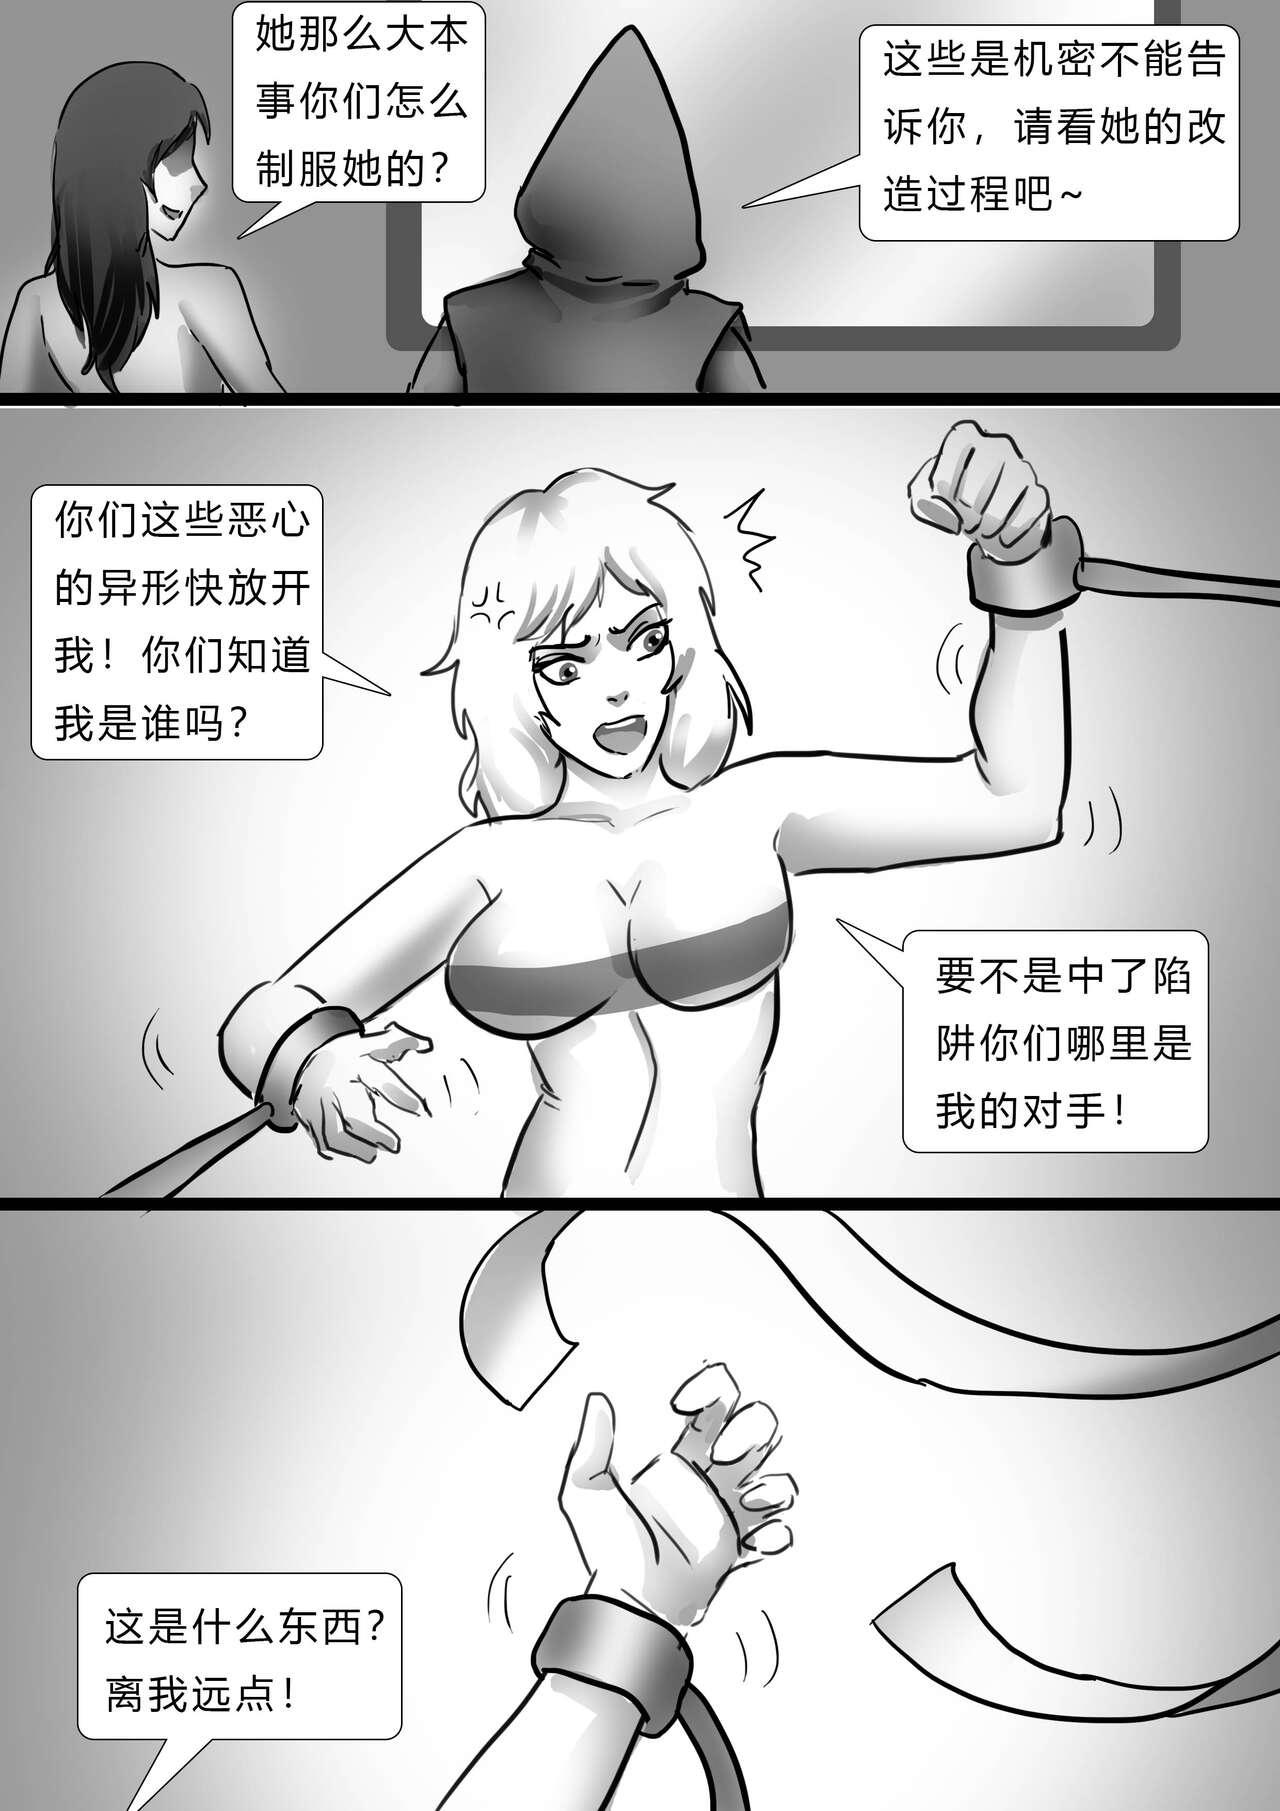 Woman 千变女奴 Thousand-change slave girl  - Page 5